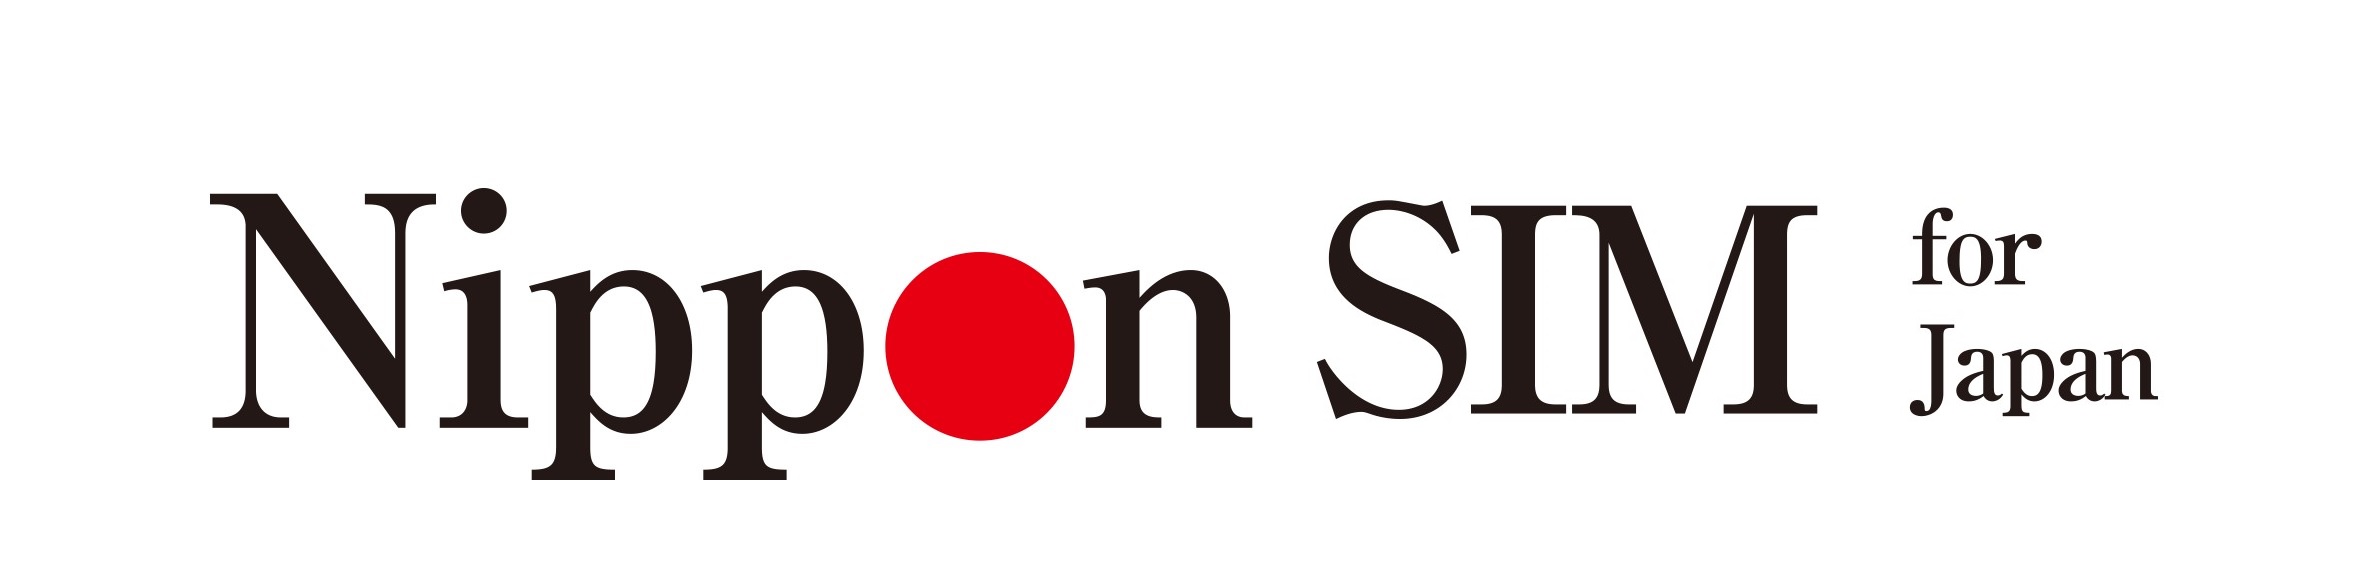 Nippon SIM for Japan